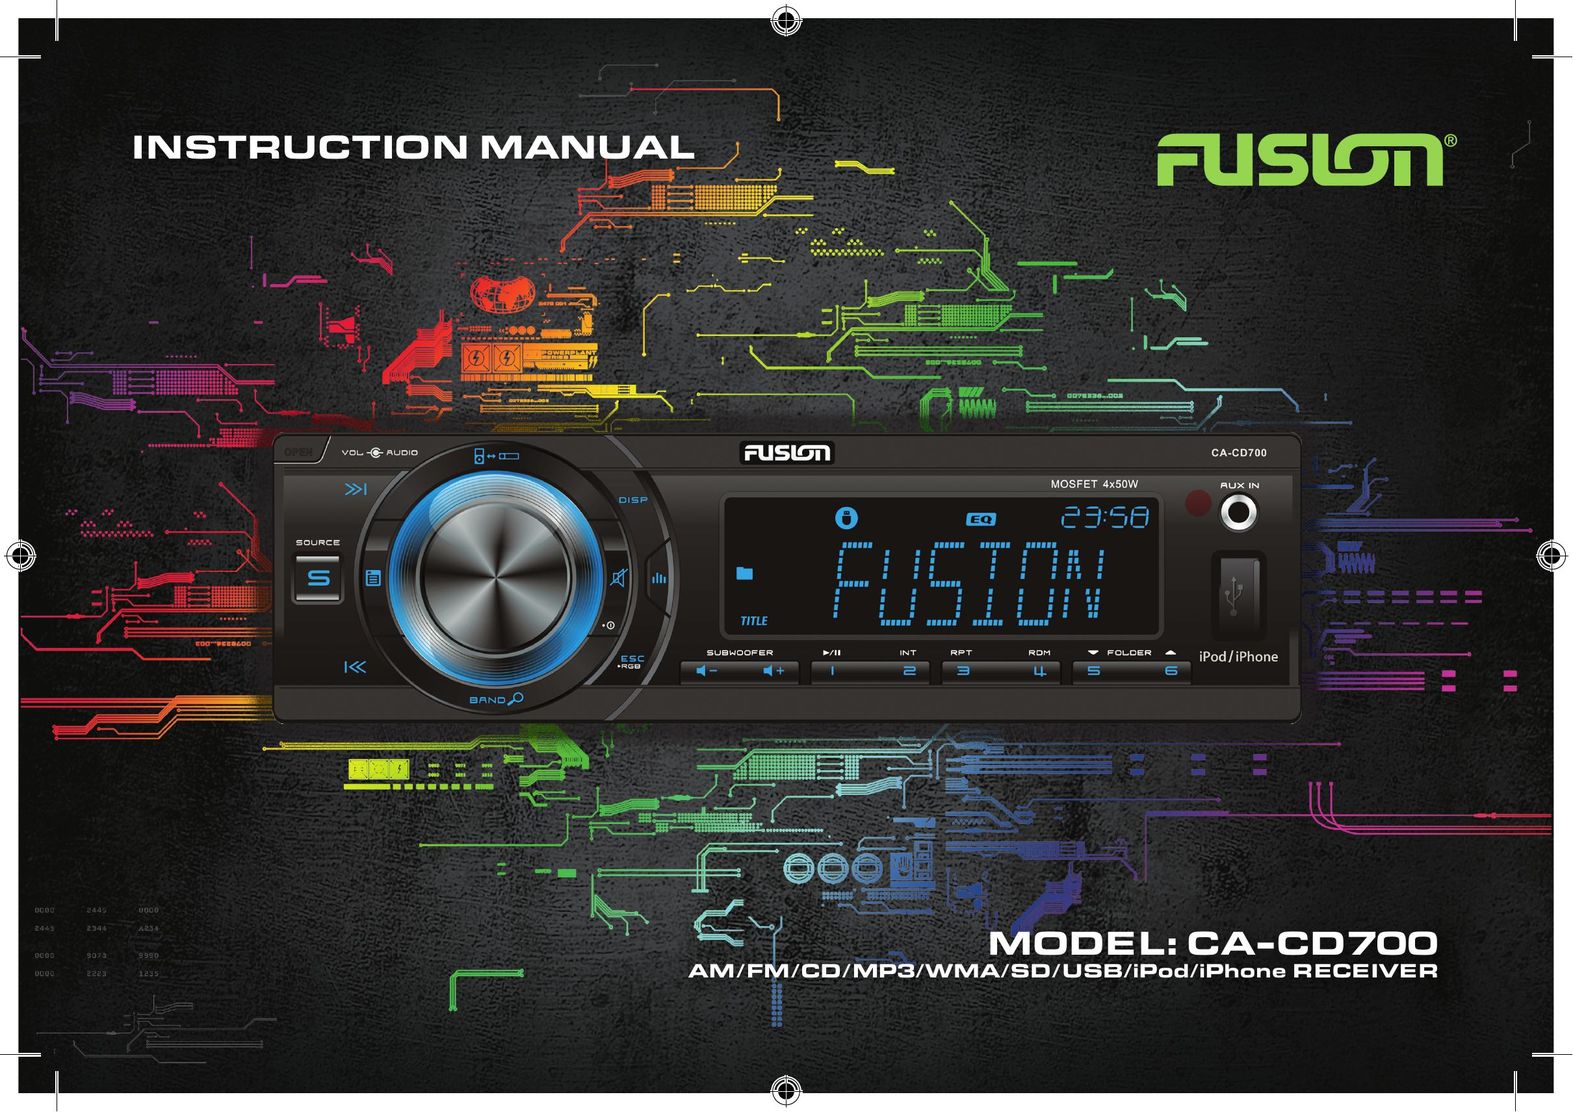 Fusionbrands CA-CD700 Car Stereo System User Manual